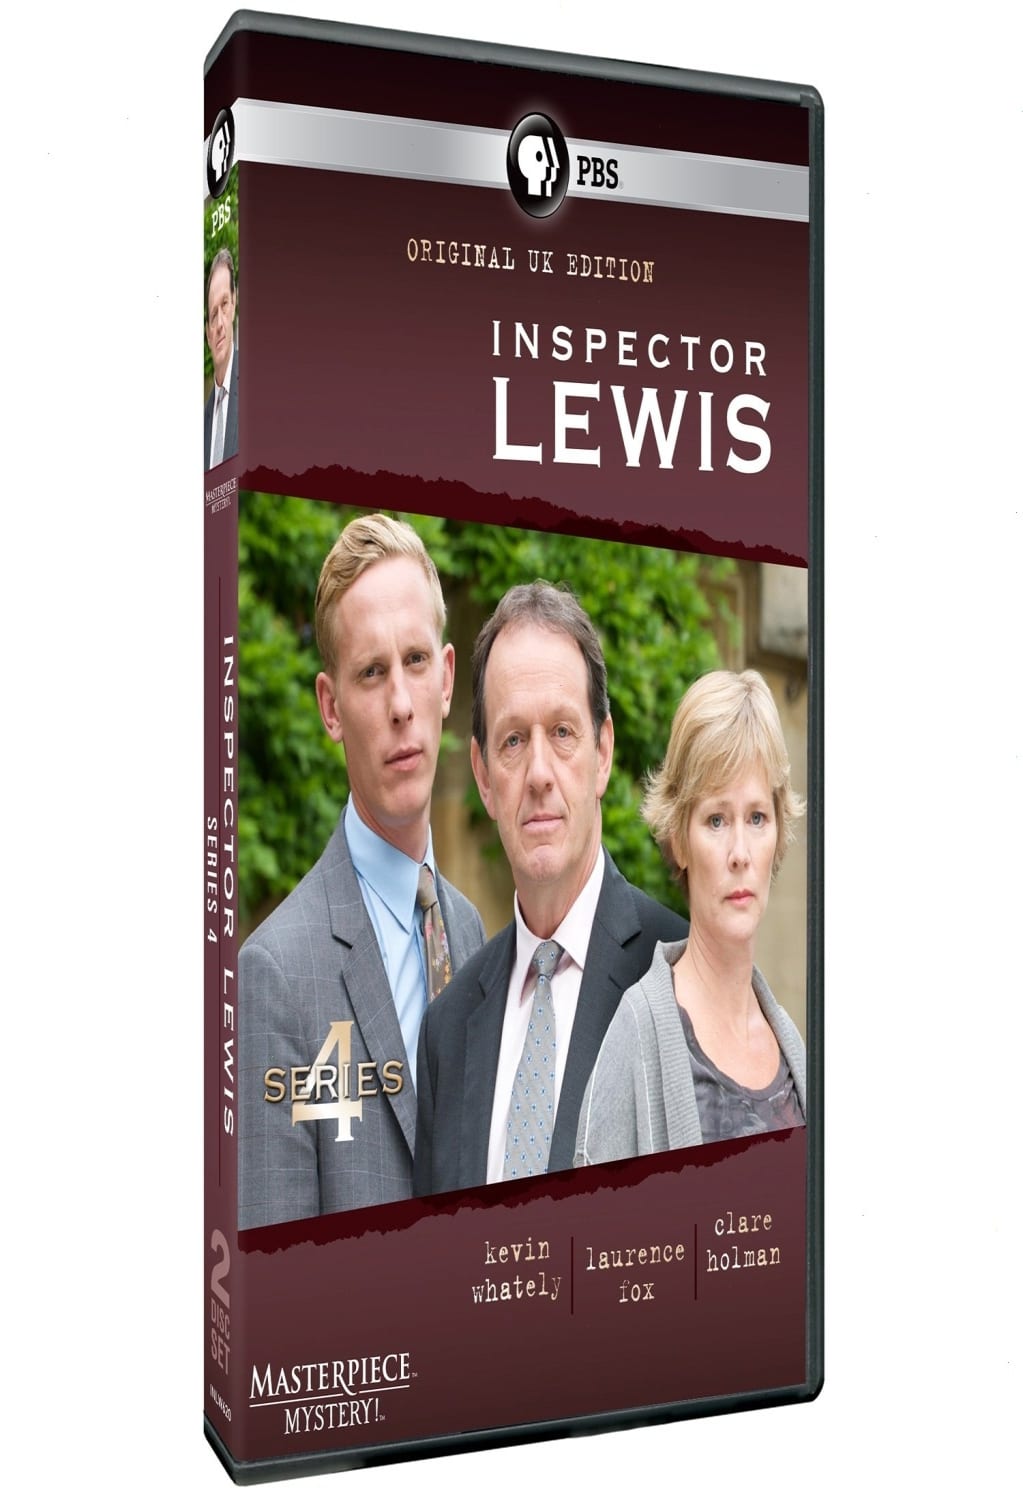 Inspector Lewis Series 4 (U.K. Edition) (DVD) on MovieShack